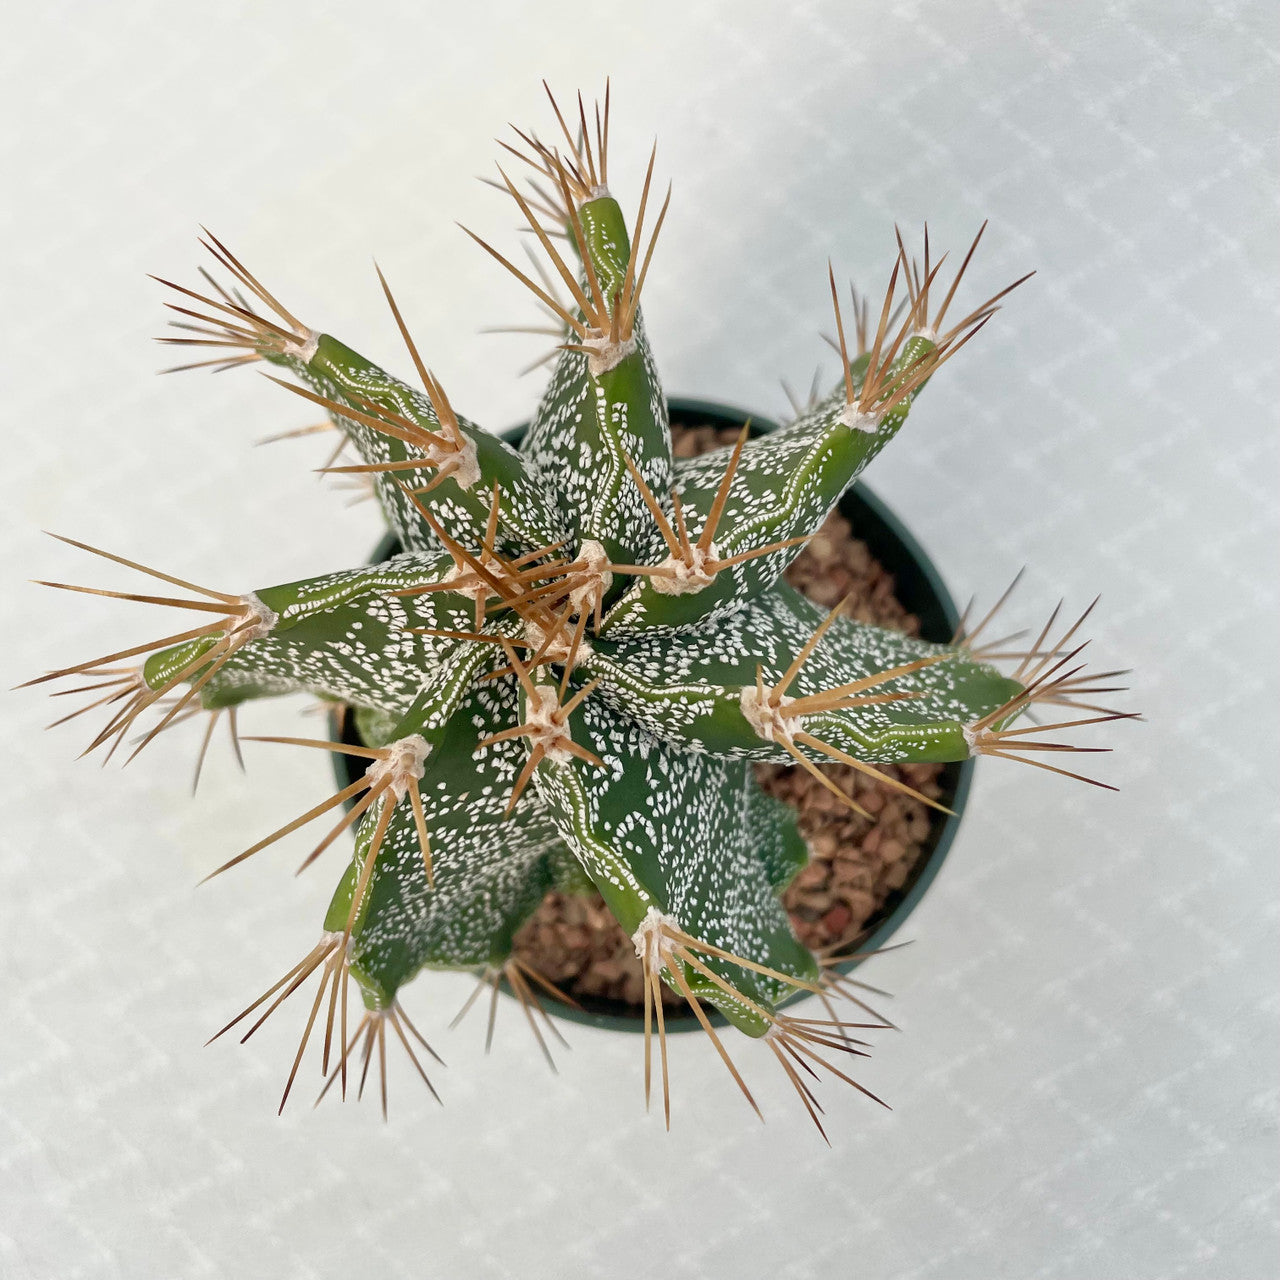 4 in. Astrophytum - Ornatum v. Mirbelii top view